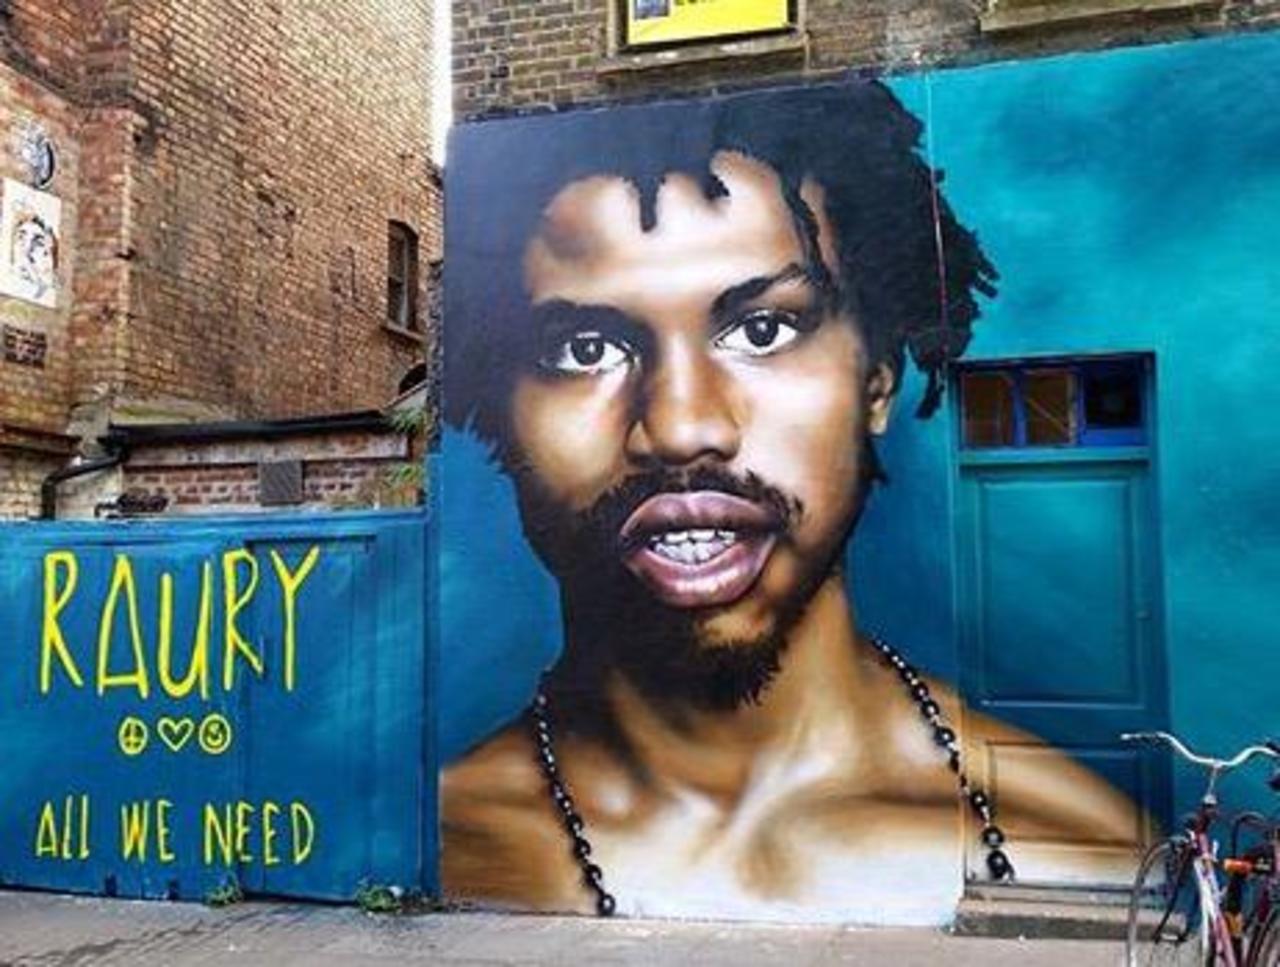 New Street Art of Raury by Olliver Switch in Brick Lane 

#art #graffiti #mural #streetart http://t.co/NjgJP0mKuD